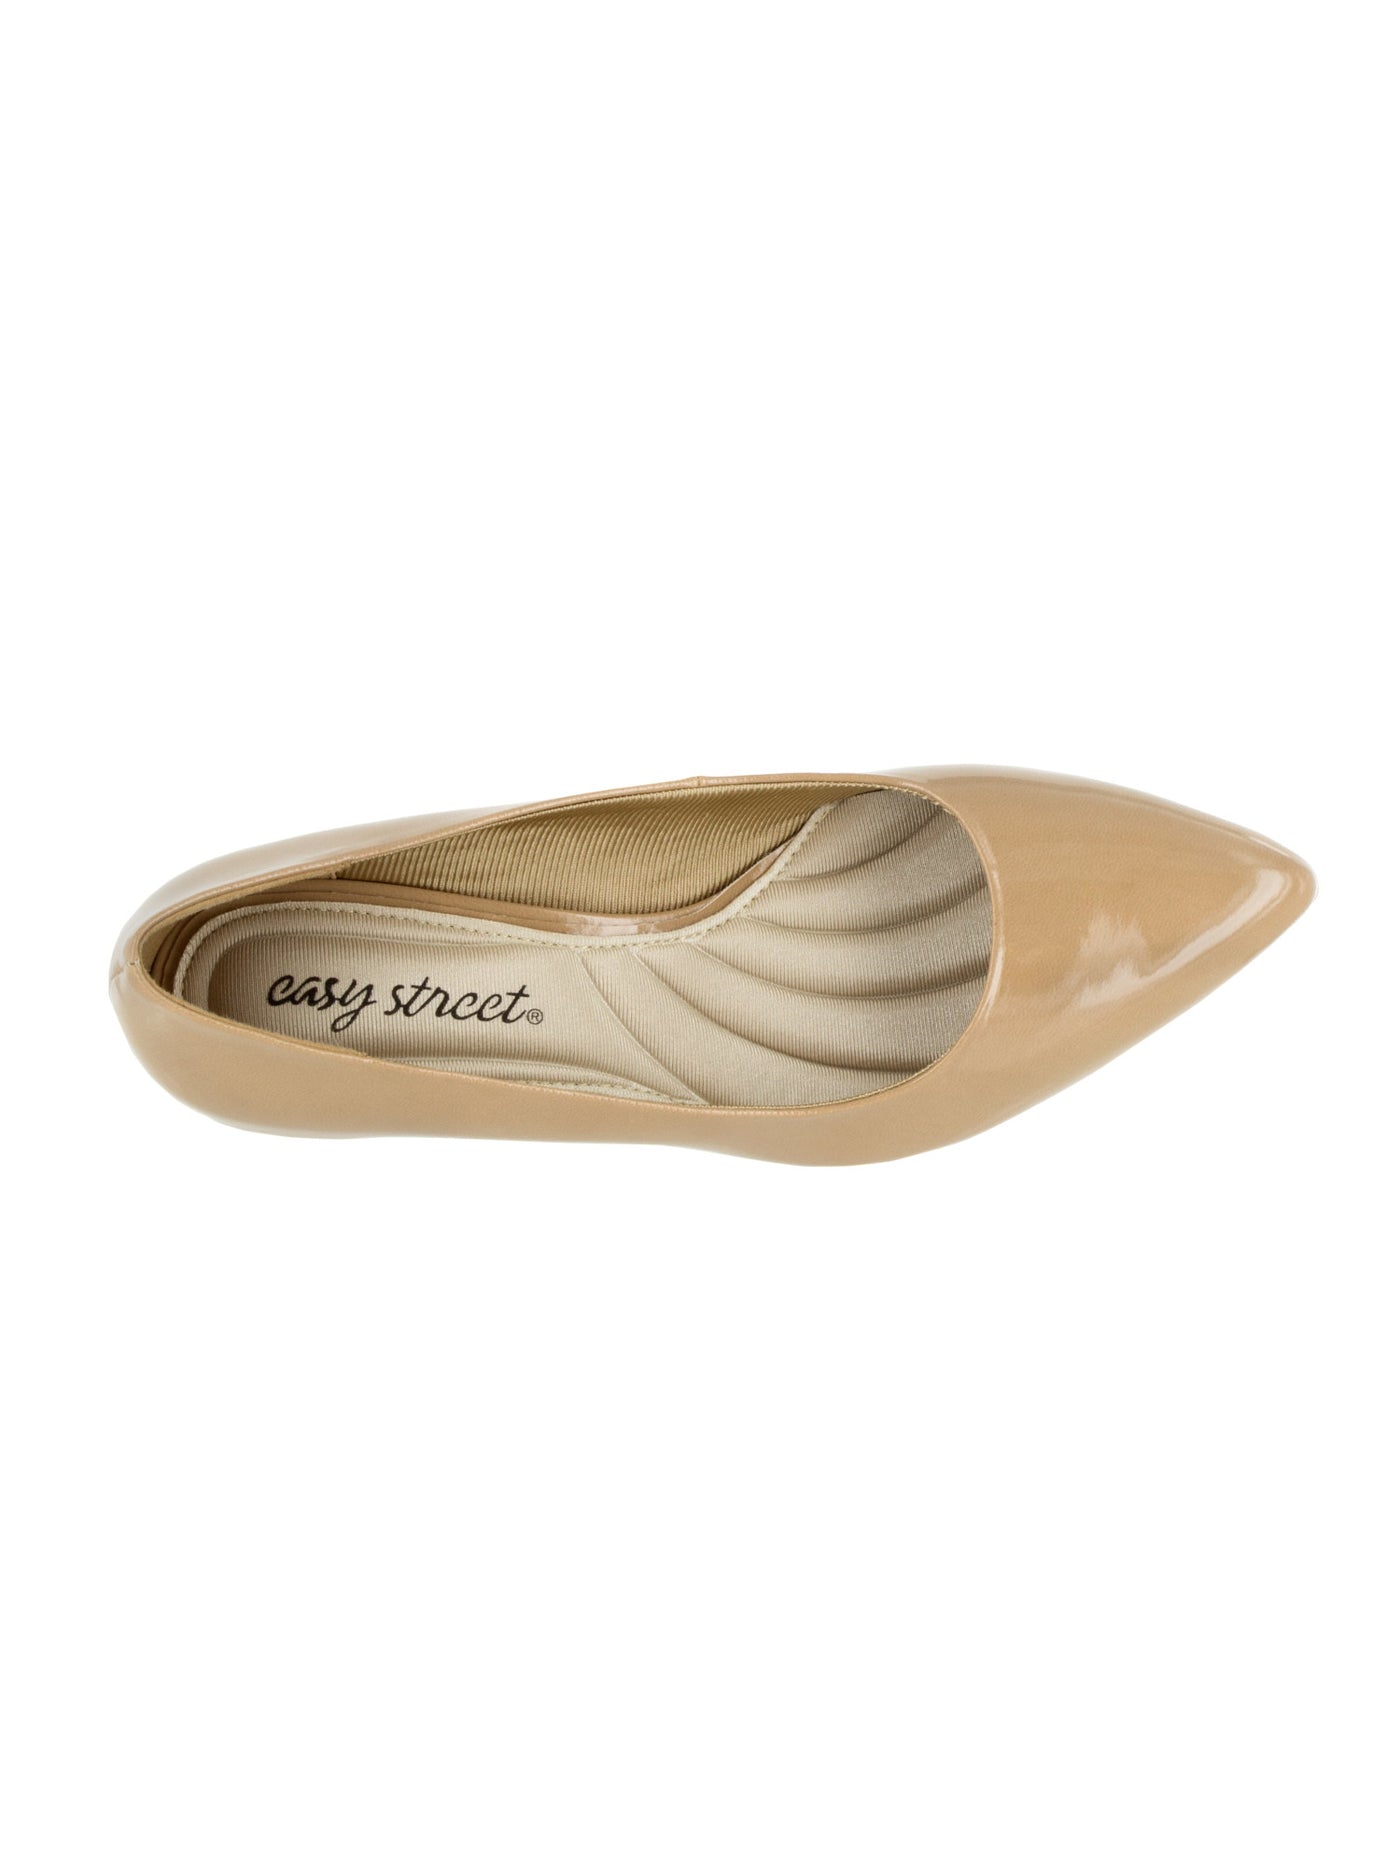 EASY STREET Womens Beige Padded Comfort Pointe Pointed Toe Kitten Heel Slip On Dress Pumps Shoes 8 M